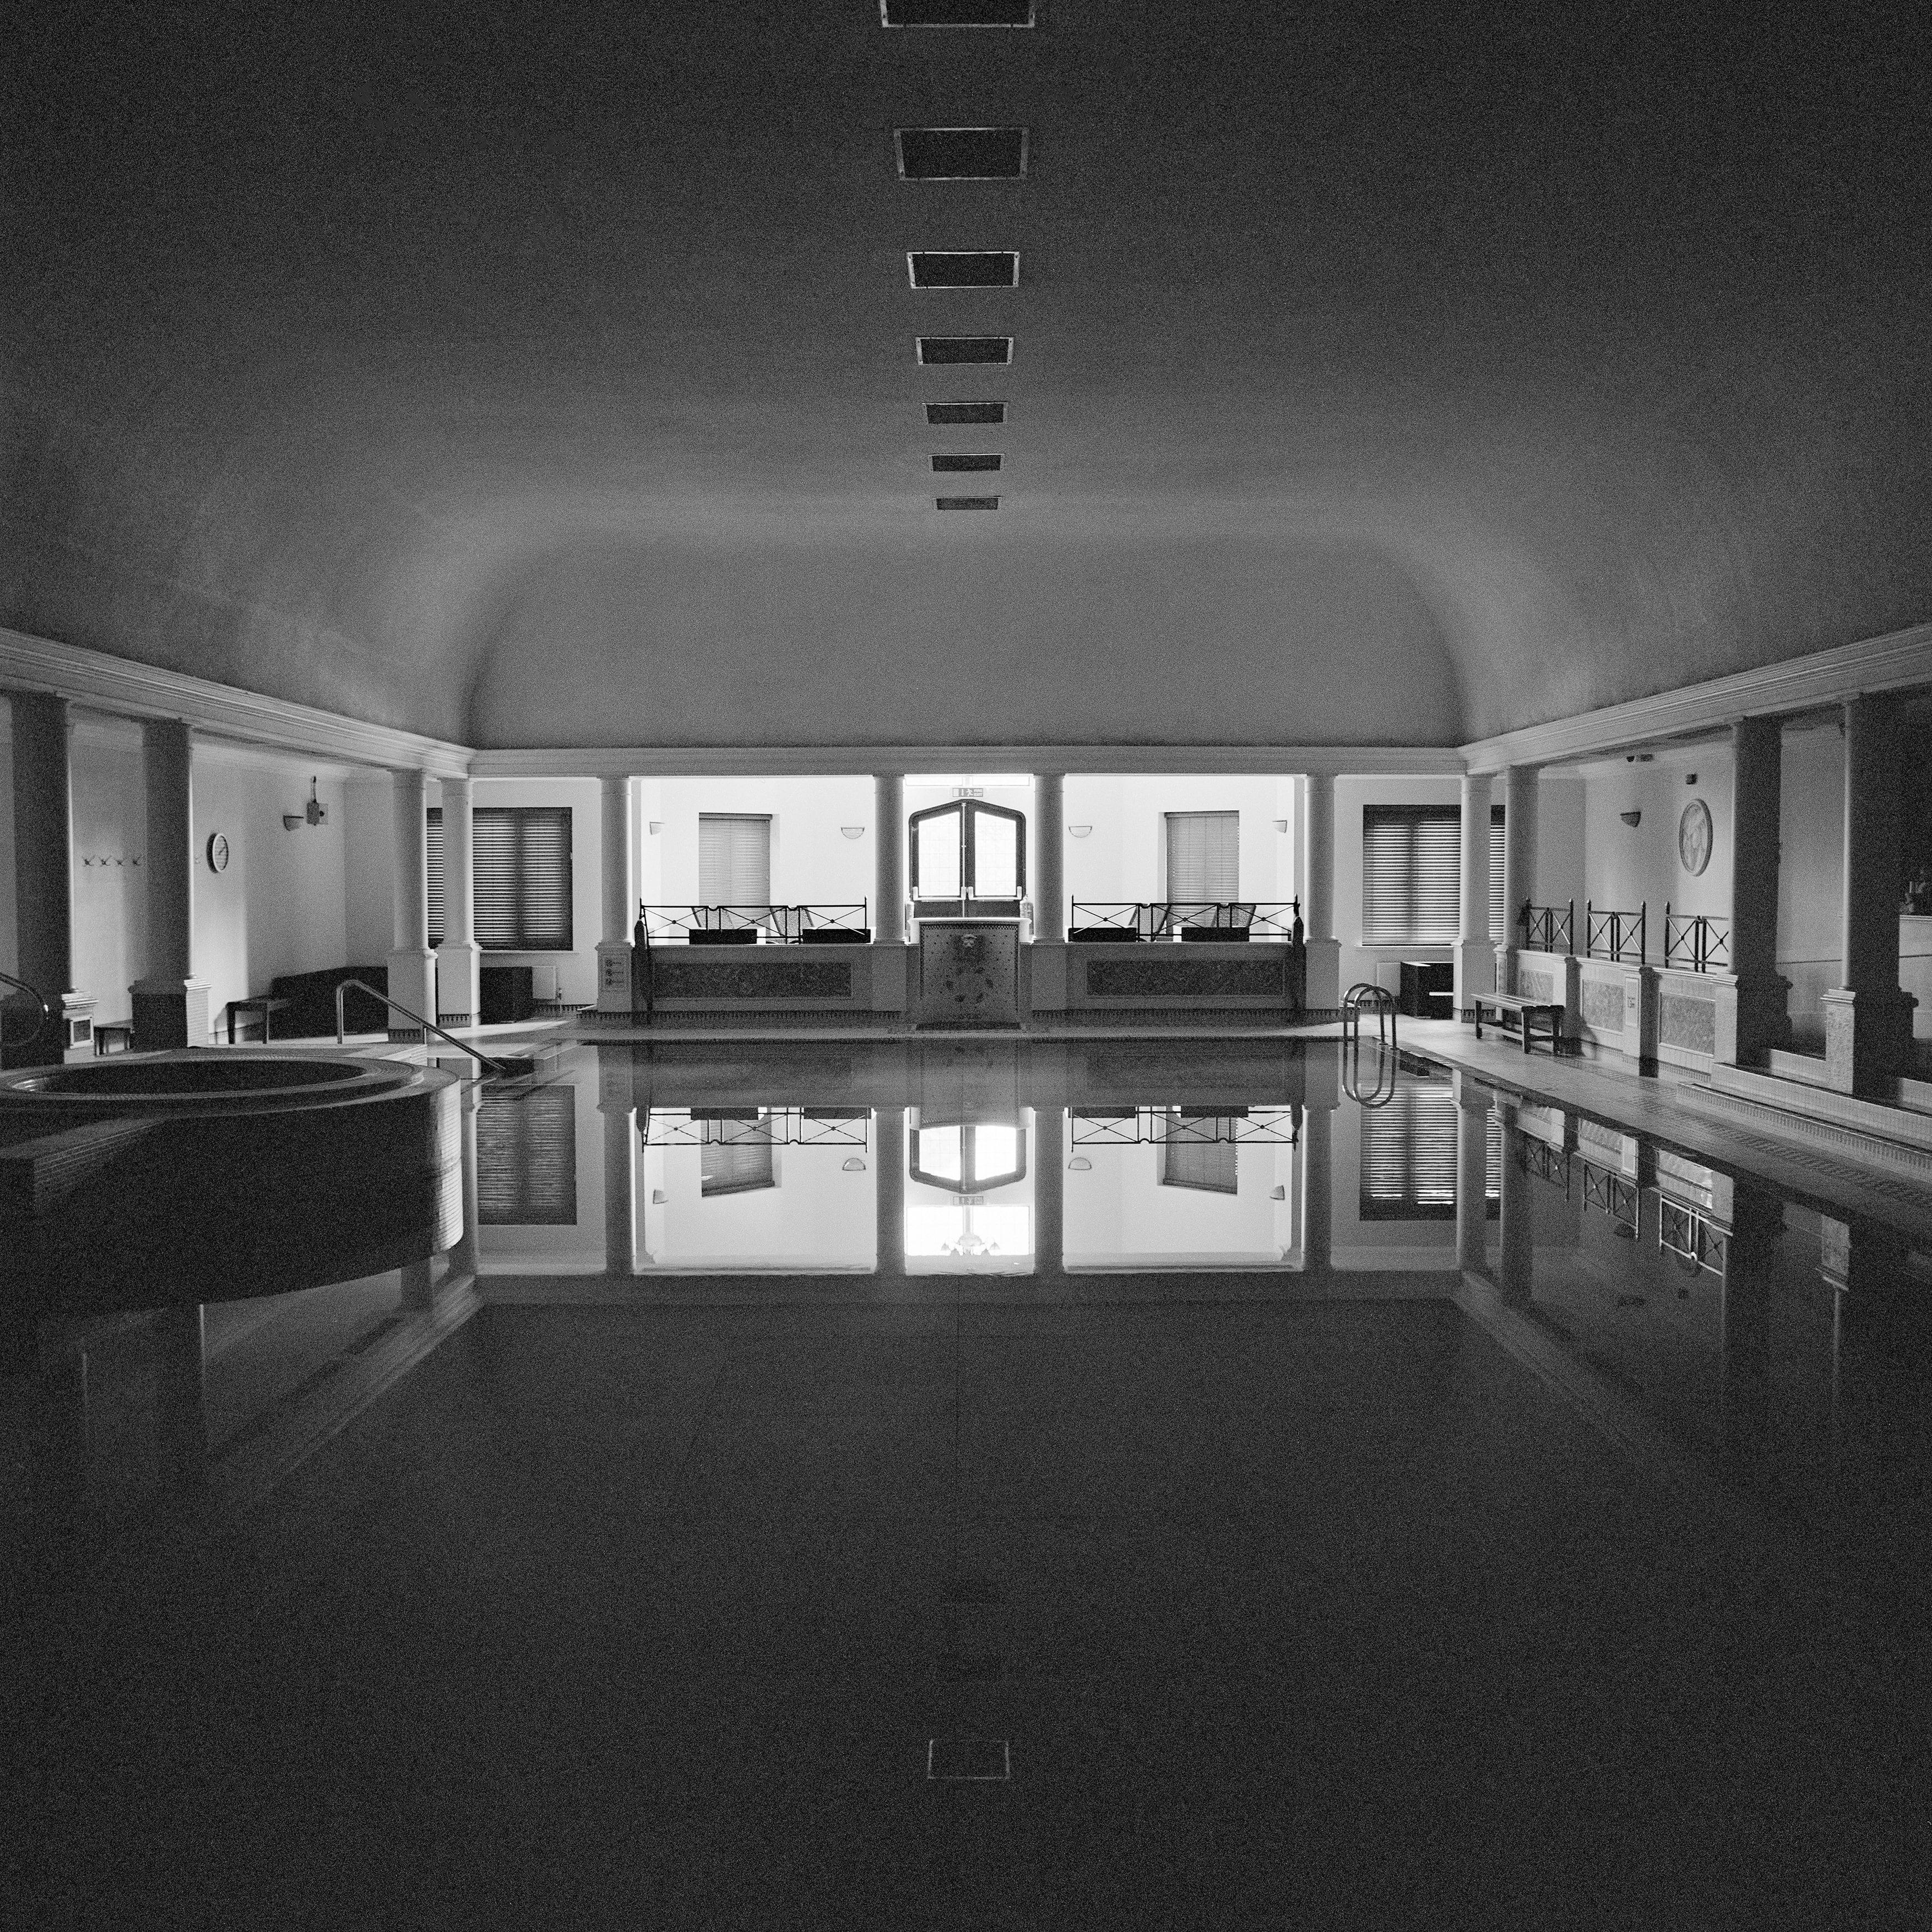 Anna Dobrovolskaya-Mints Black and White Photograph - Monochrome Square Architecture Photography: Swimming Pool Design